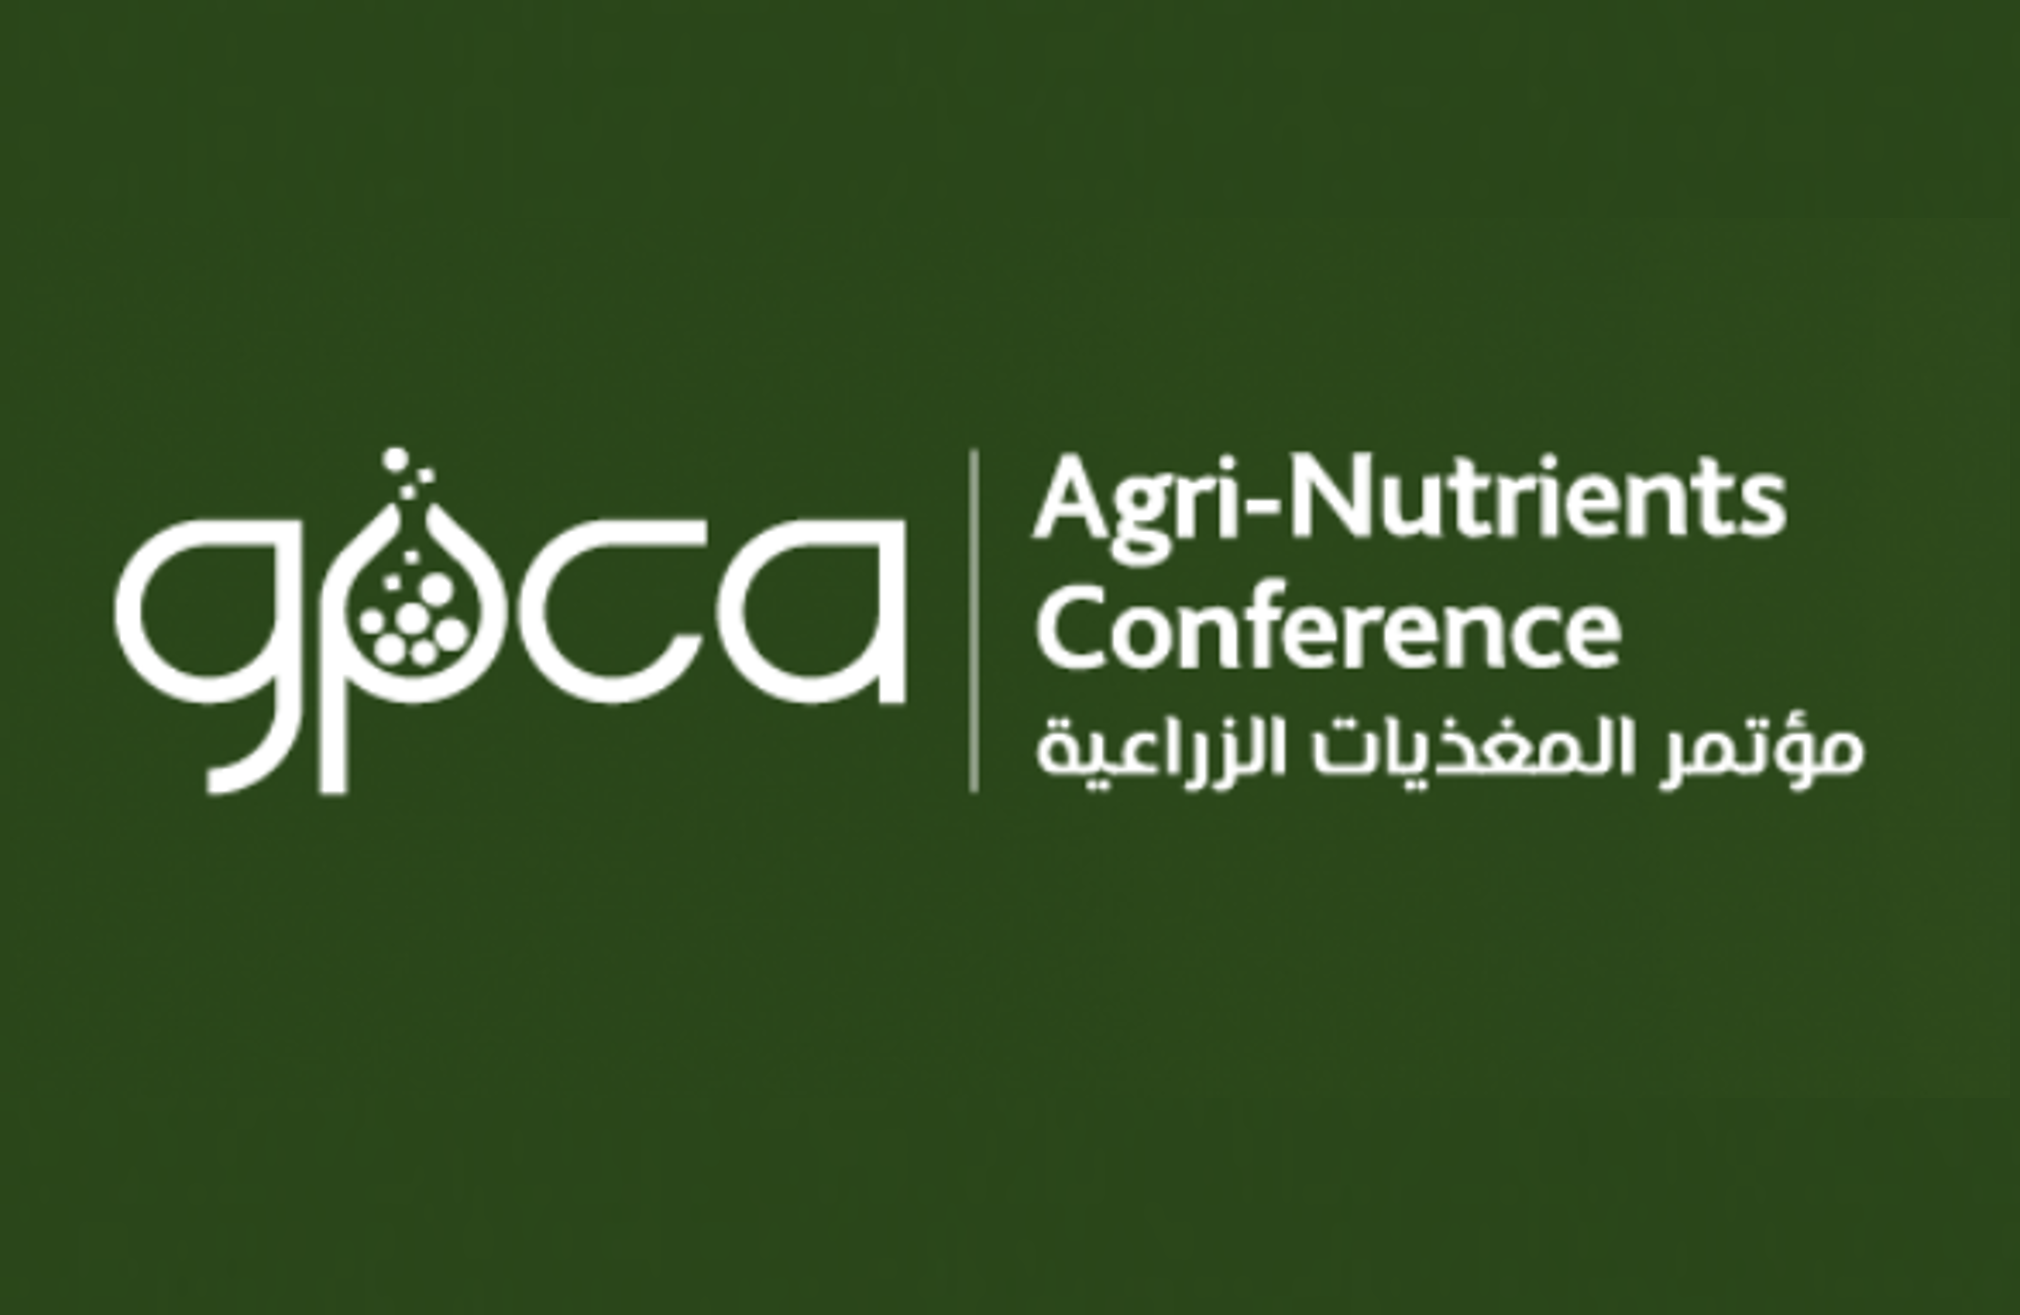 NexantECA GPCA AGRI-NUTRIENTS CONFERENCE